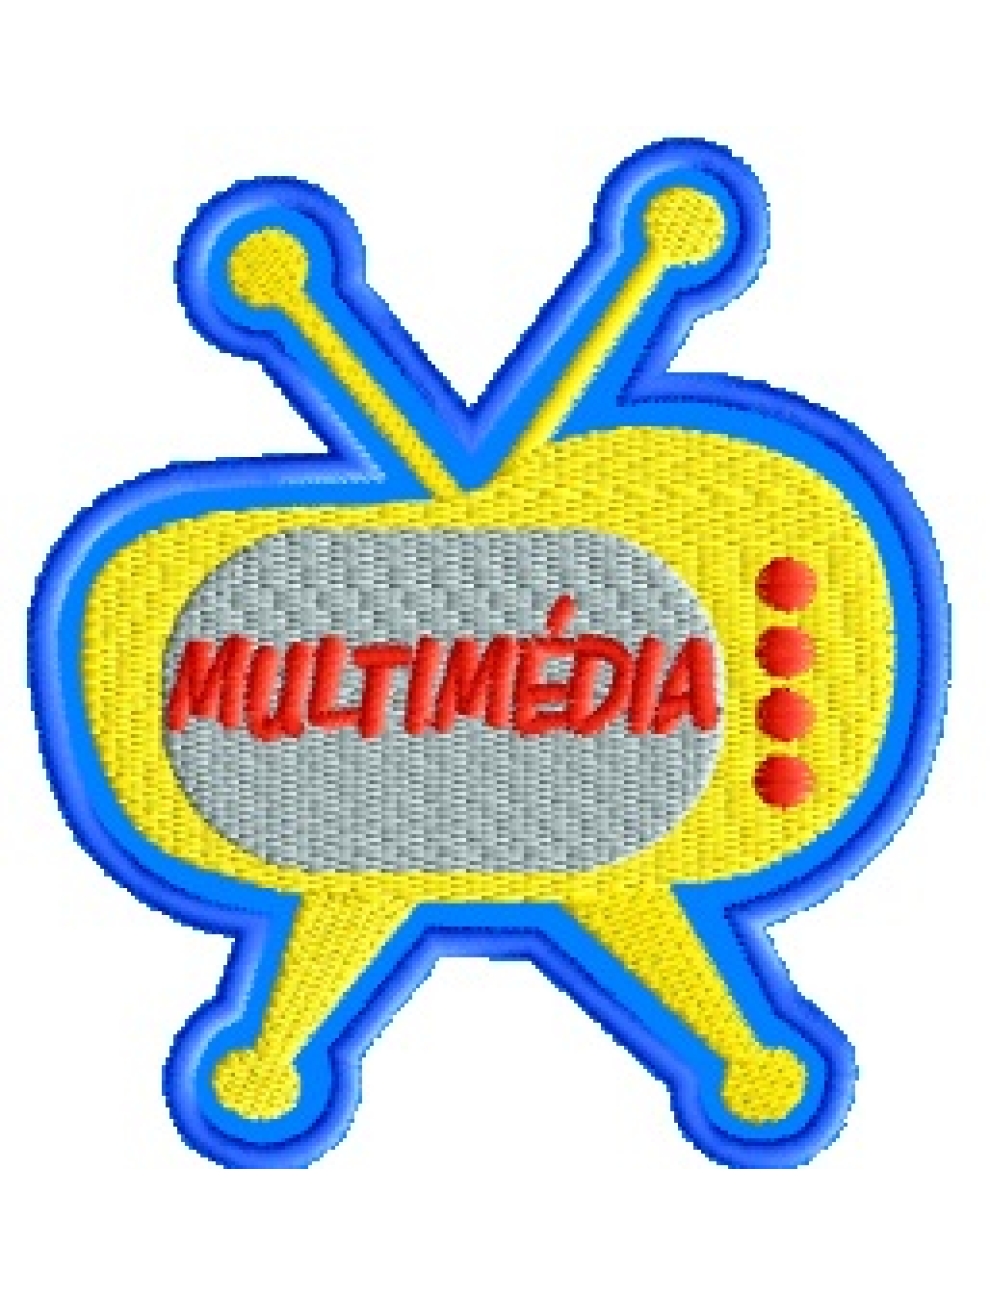 Multimédia